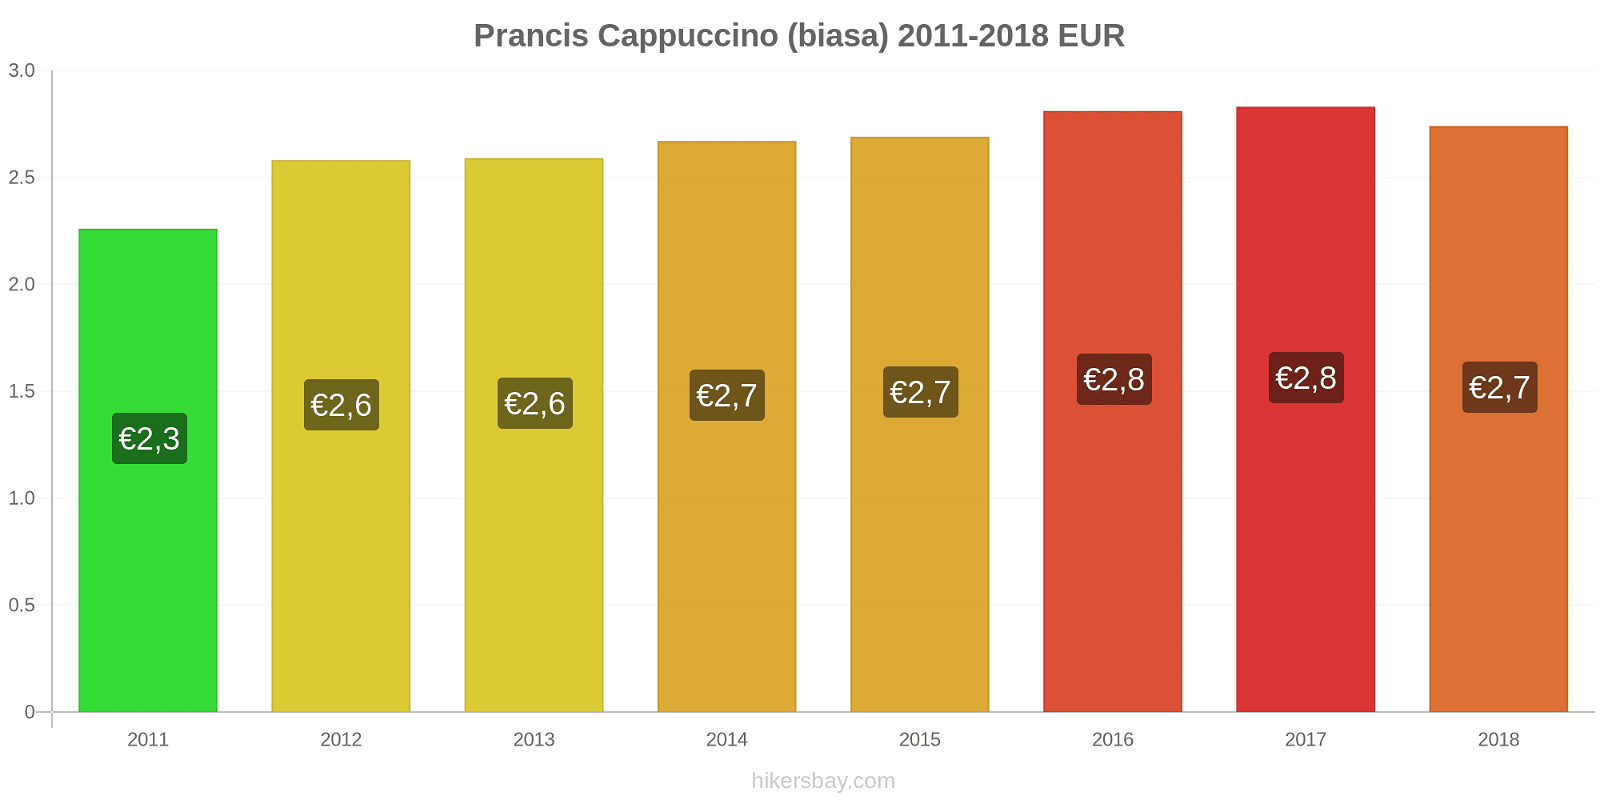 Prancis perubahan harga Cappuccino hikersbay.com